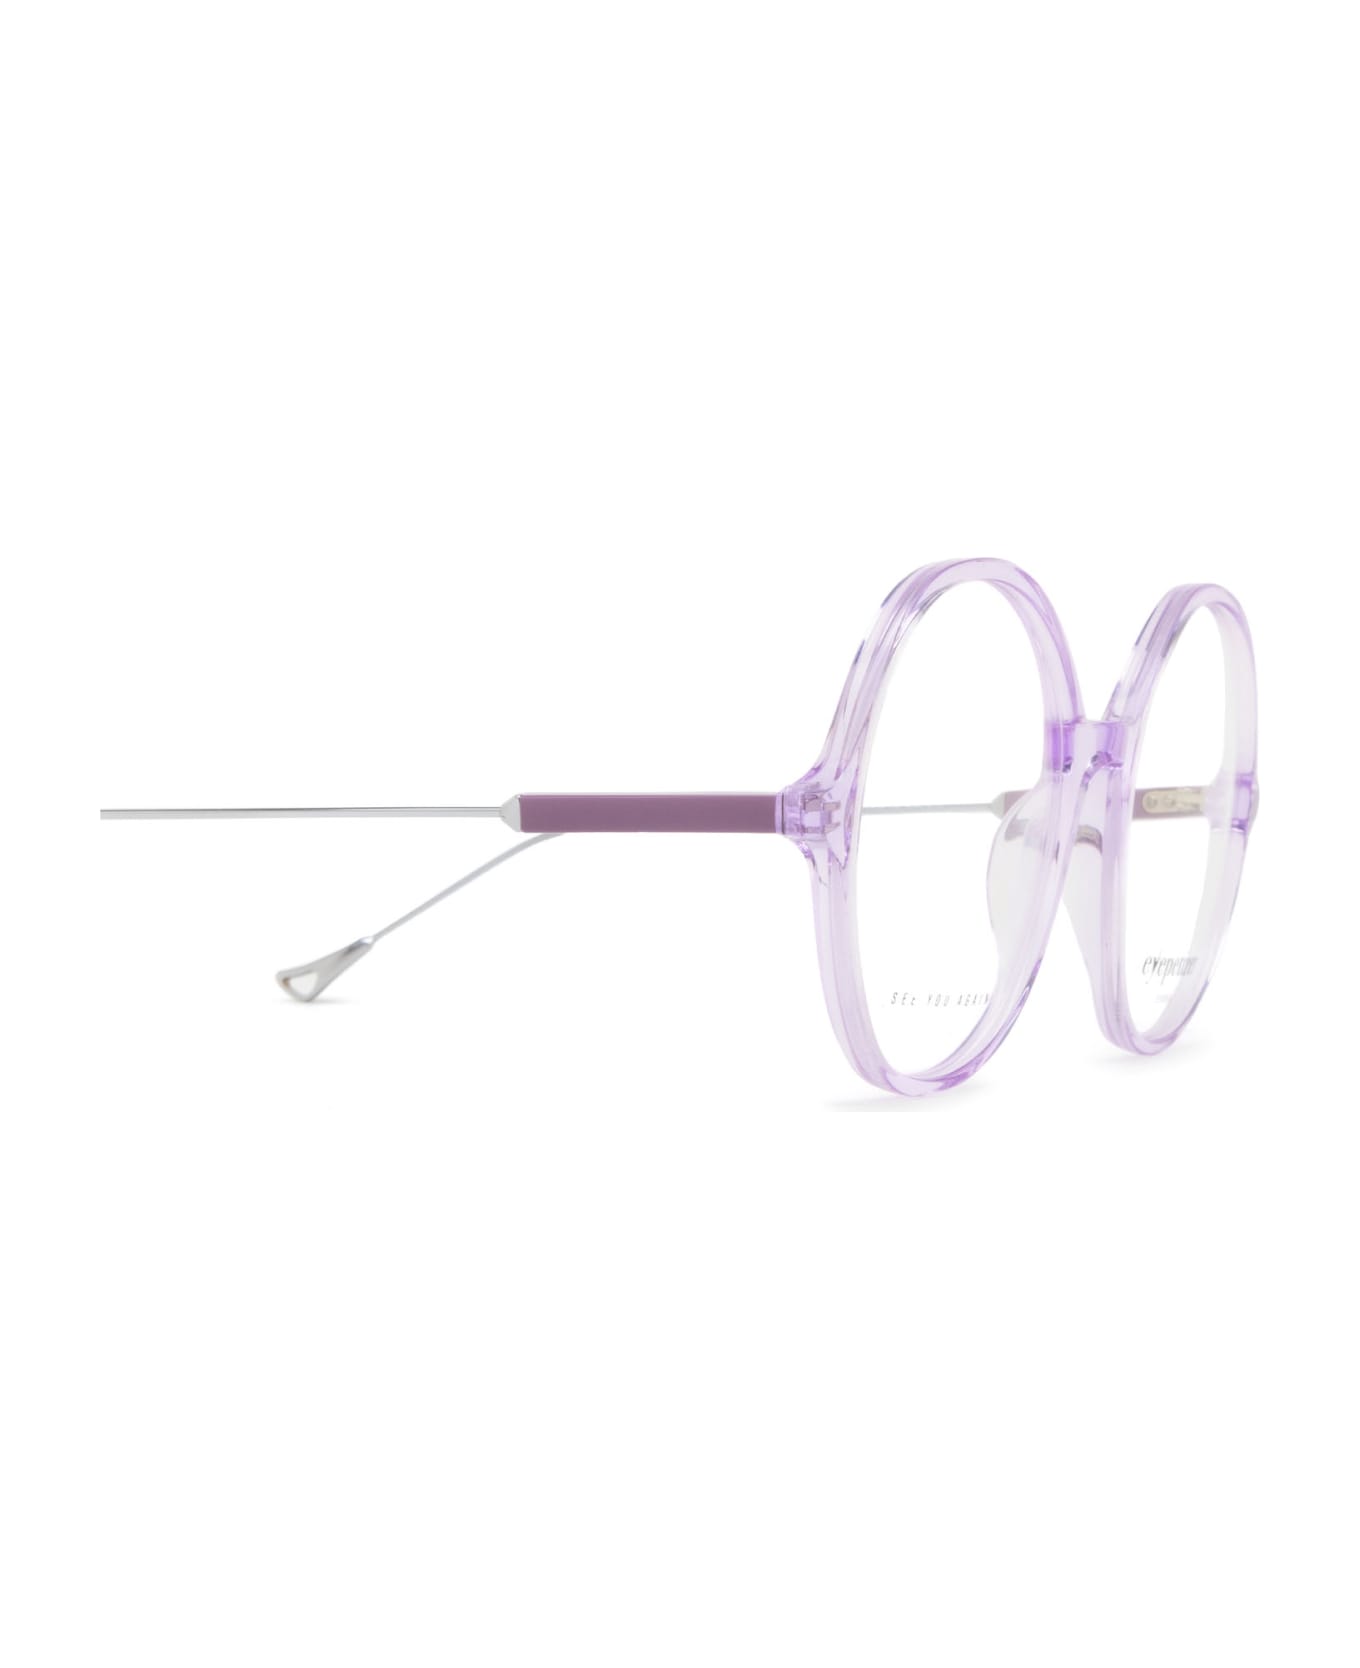 Eyepetizer Soleil Lilac Glasses - Lilac アイウェア